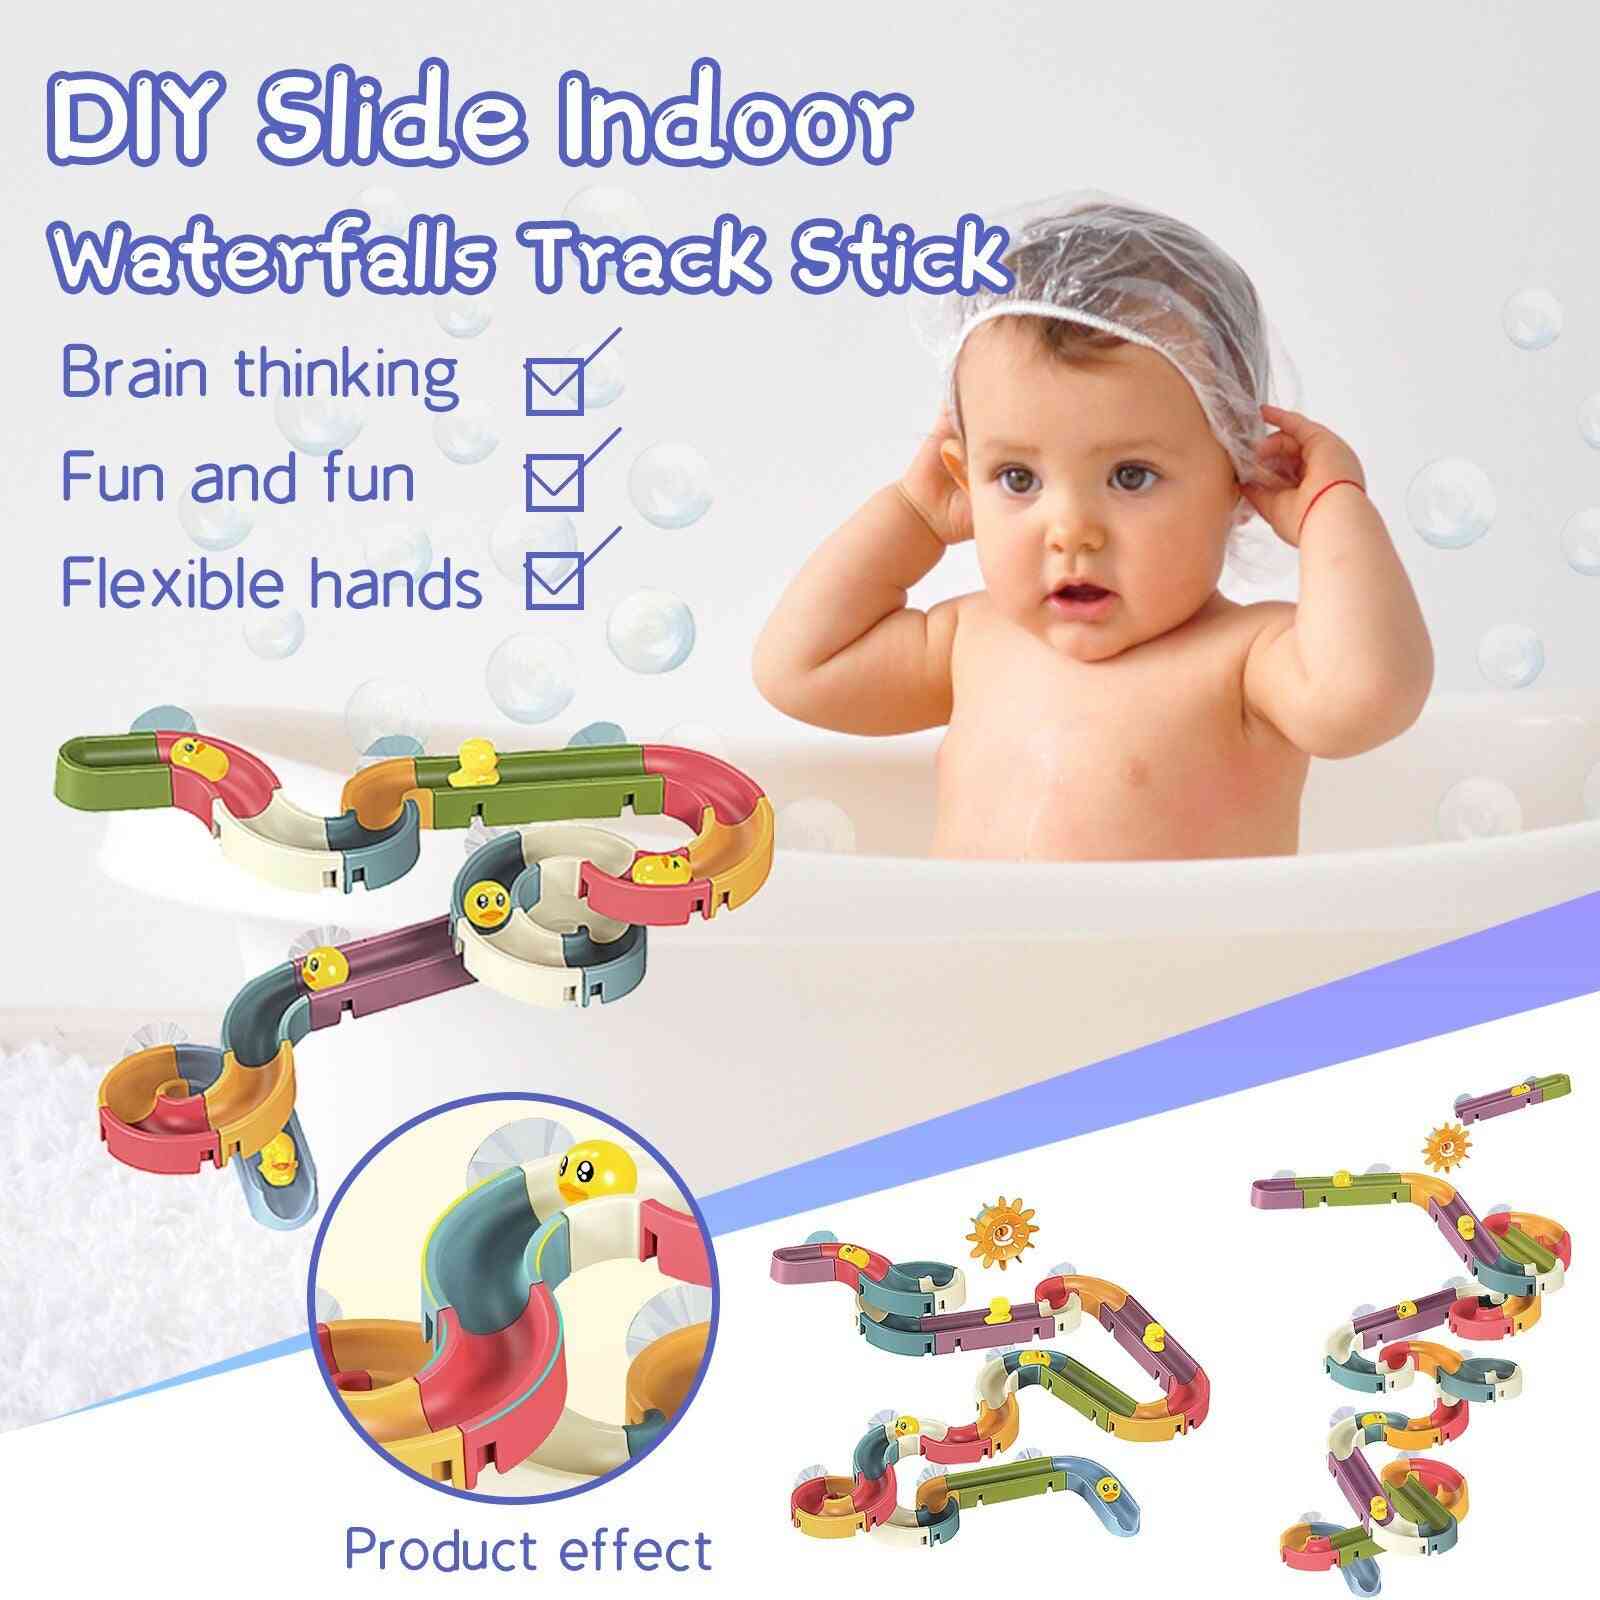 Bath fun slide innendørs fosser track stick to wall badekar bad svømming vann barn